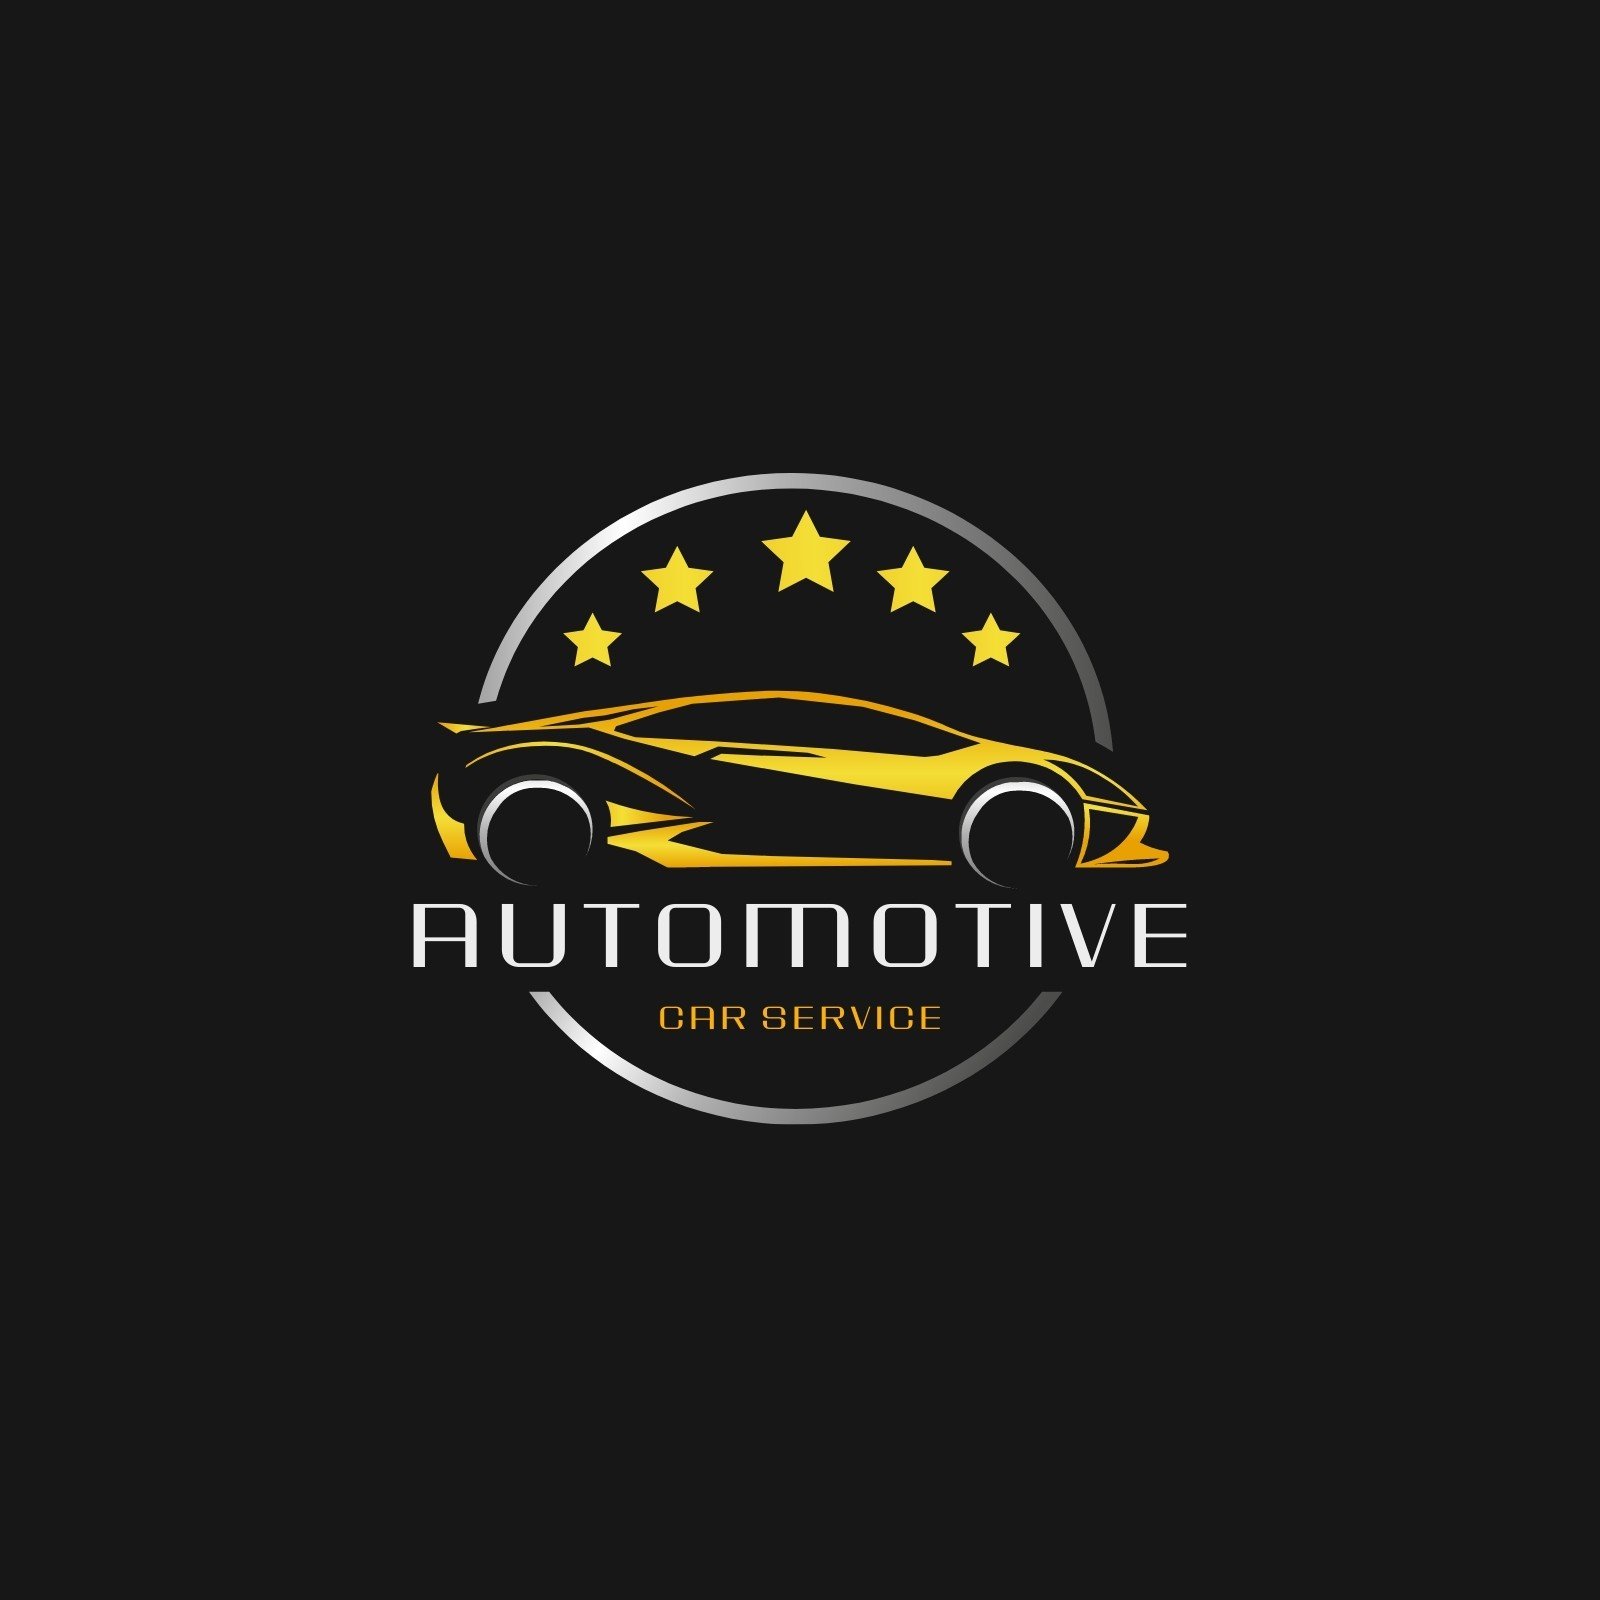 Minimalist Automotive Car Service Logo